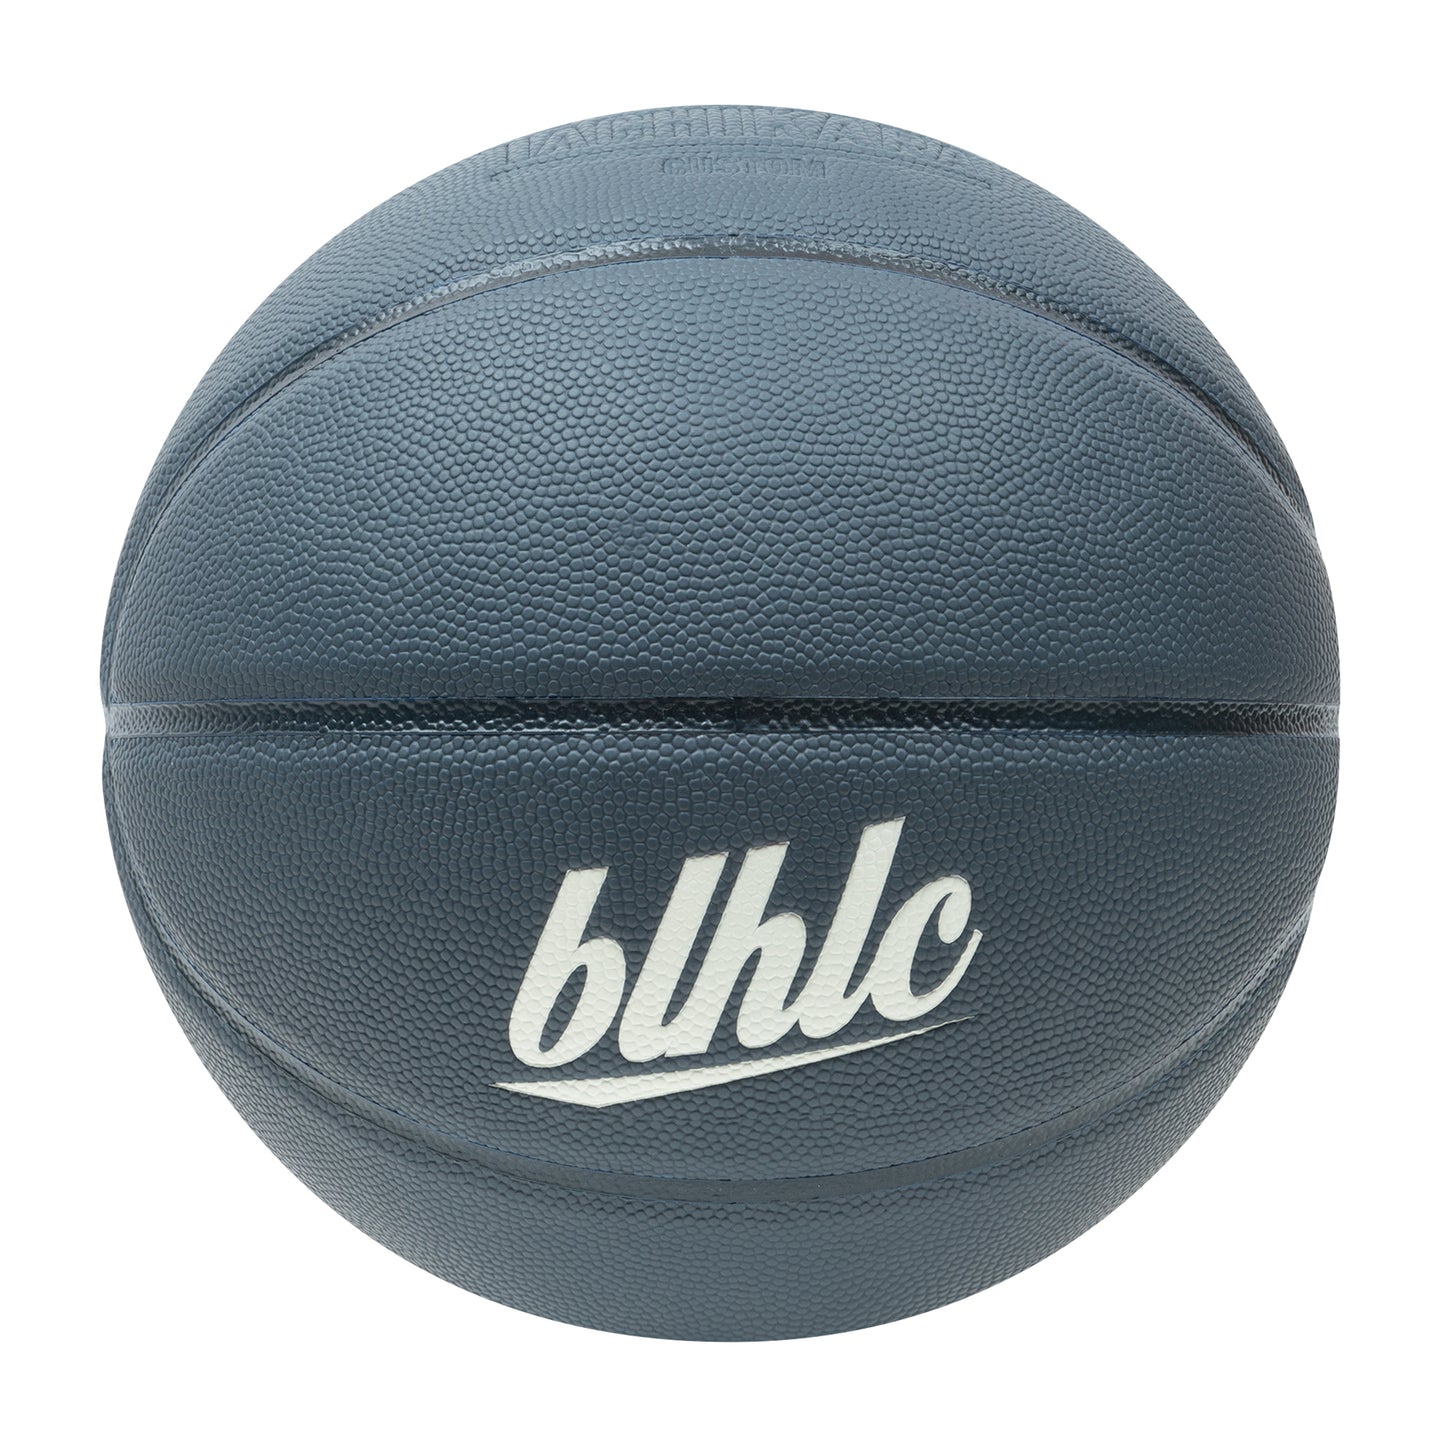 Playground Basketball / ballaholic x TACHIKARA (slate blue/dark navy/white) 5